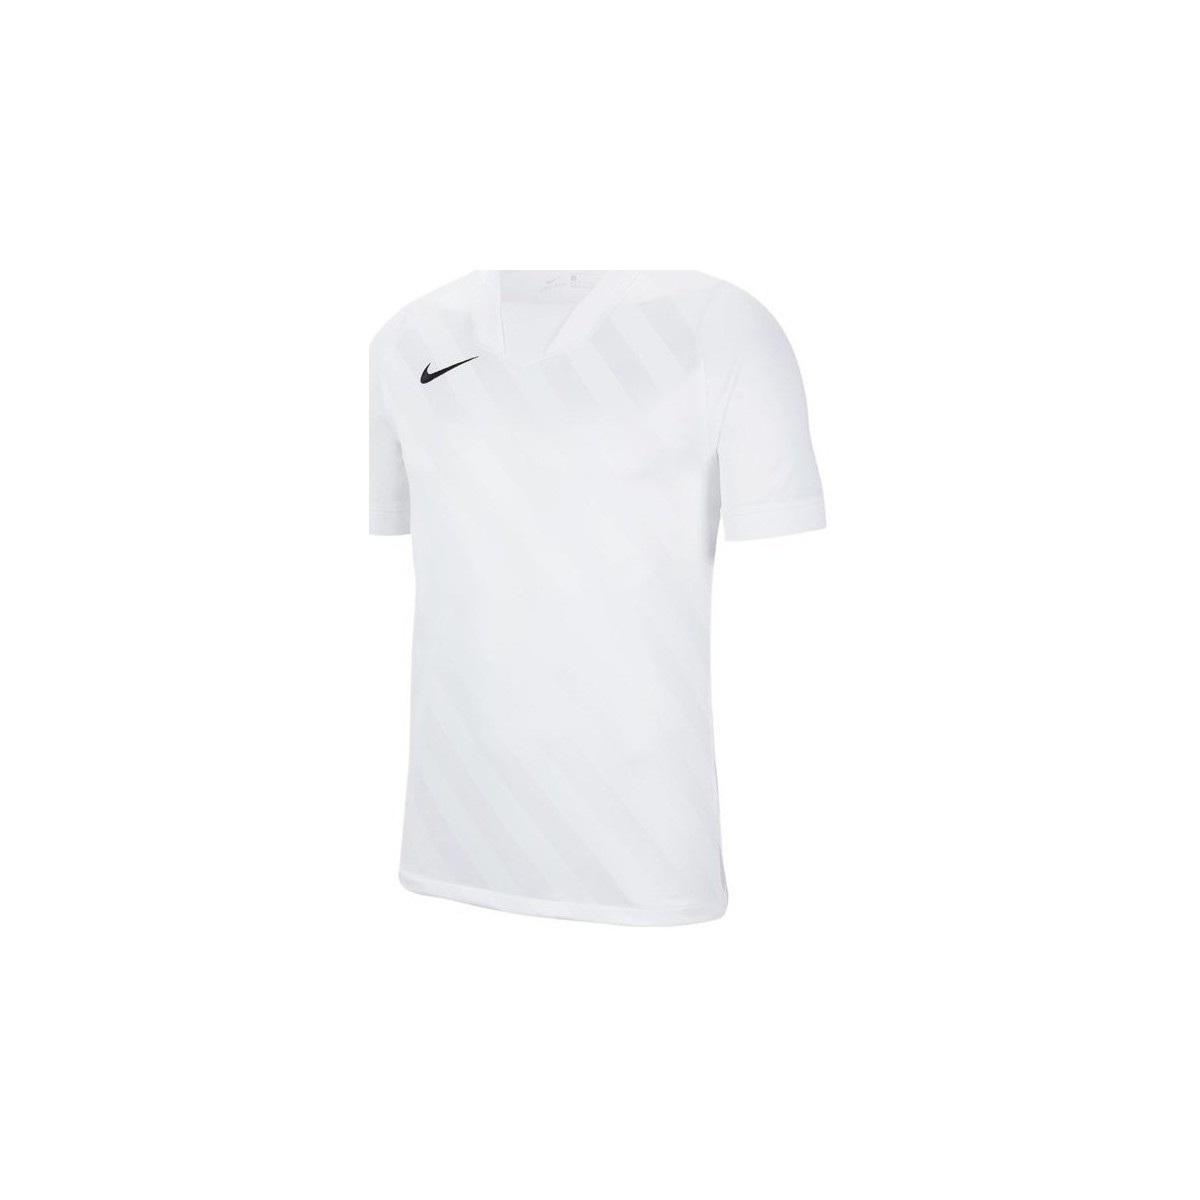 Kleidung Herren T-Shirts Nike Challenge Iii Weiss